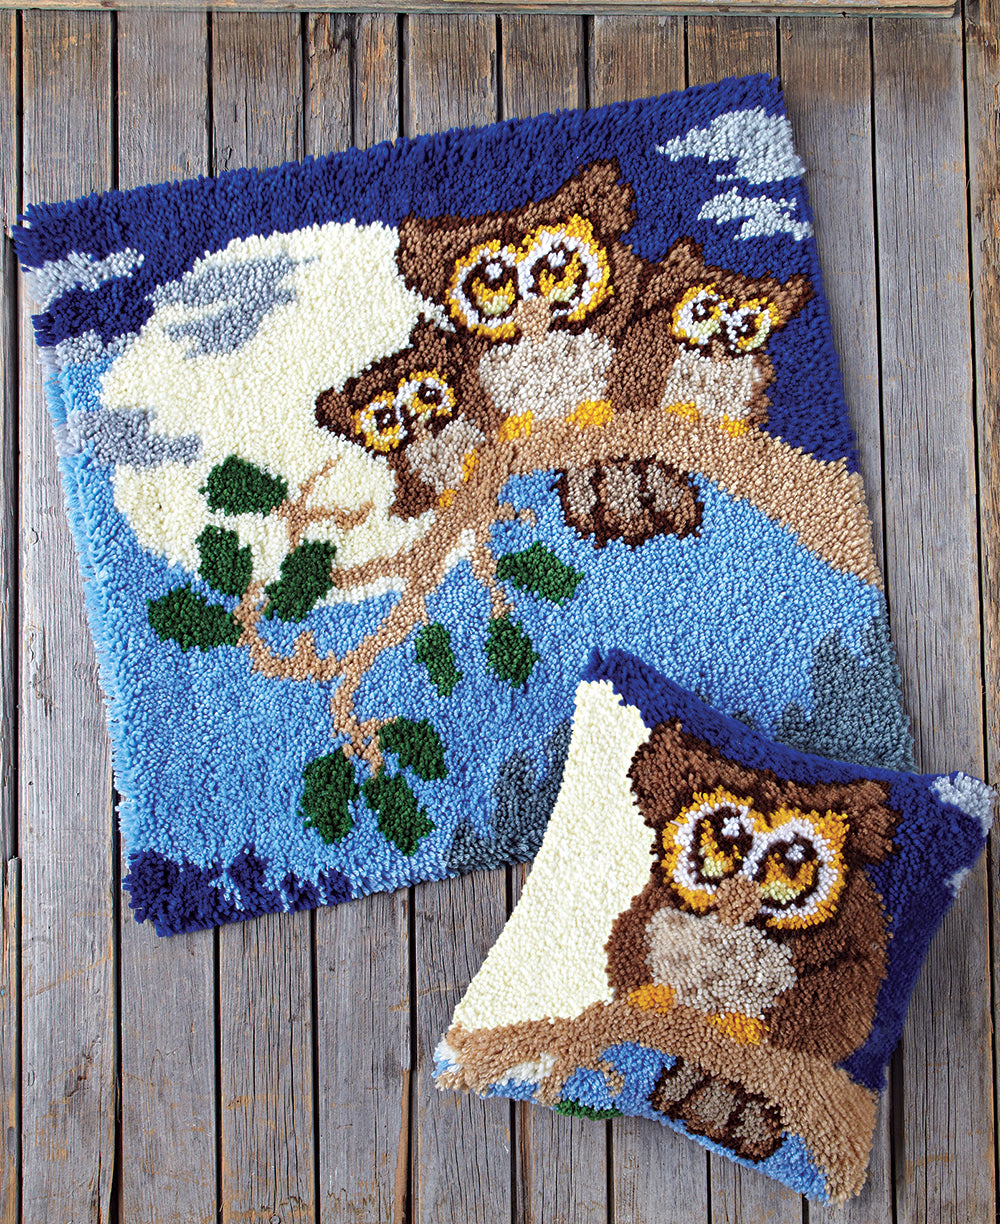 Night Owl Rug Pattern